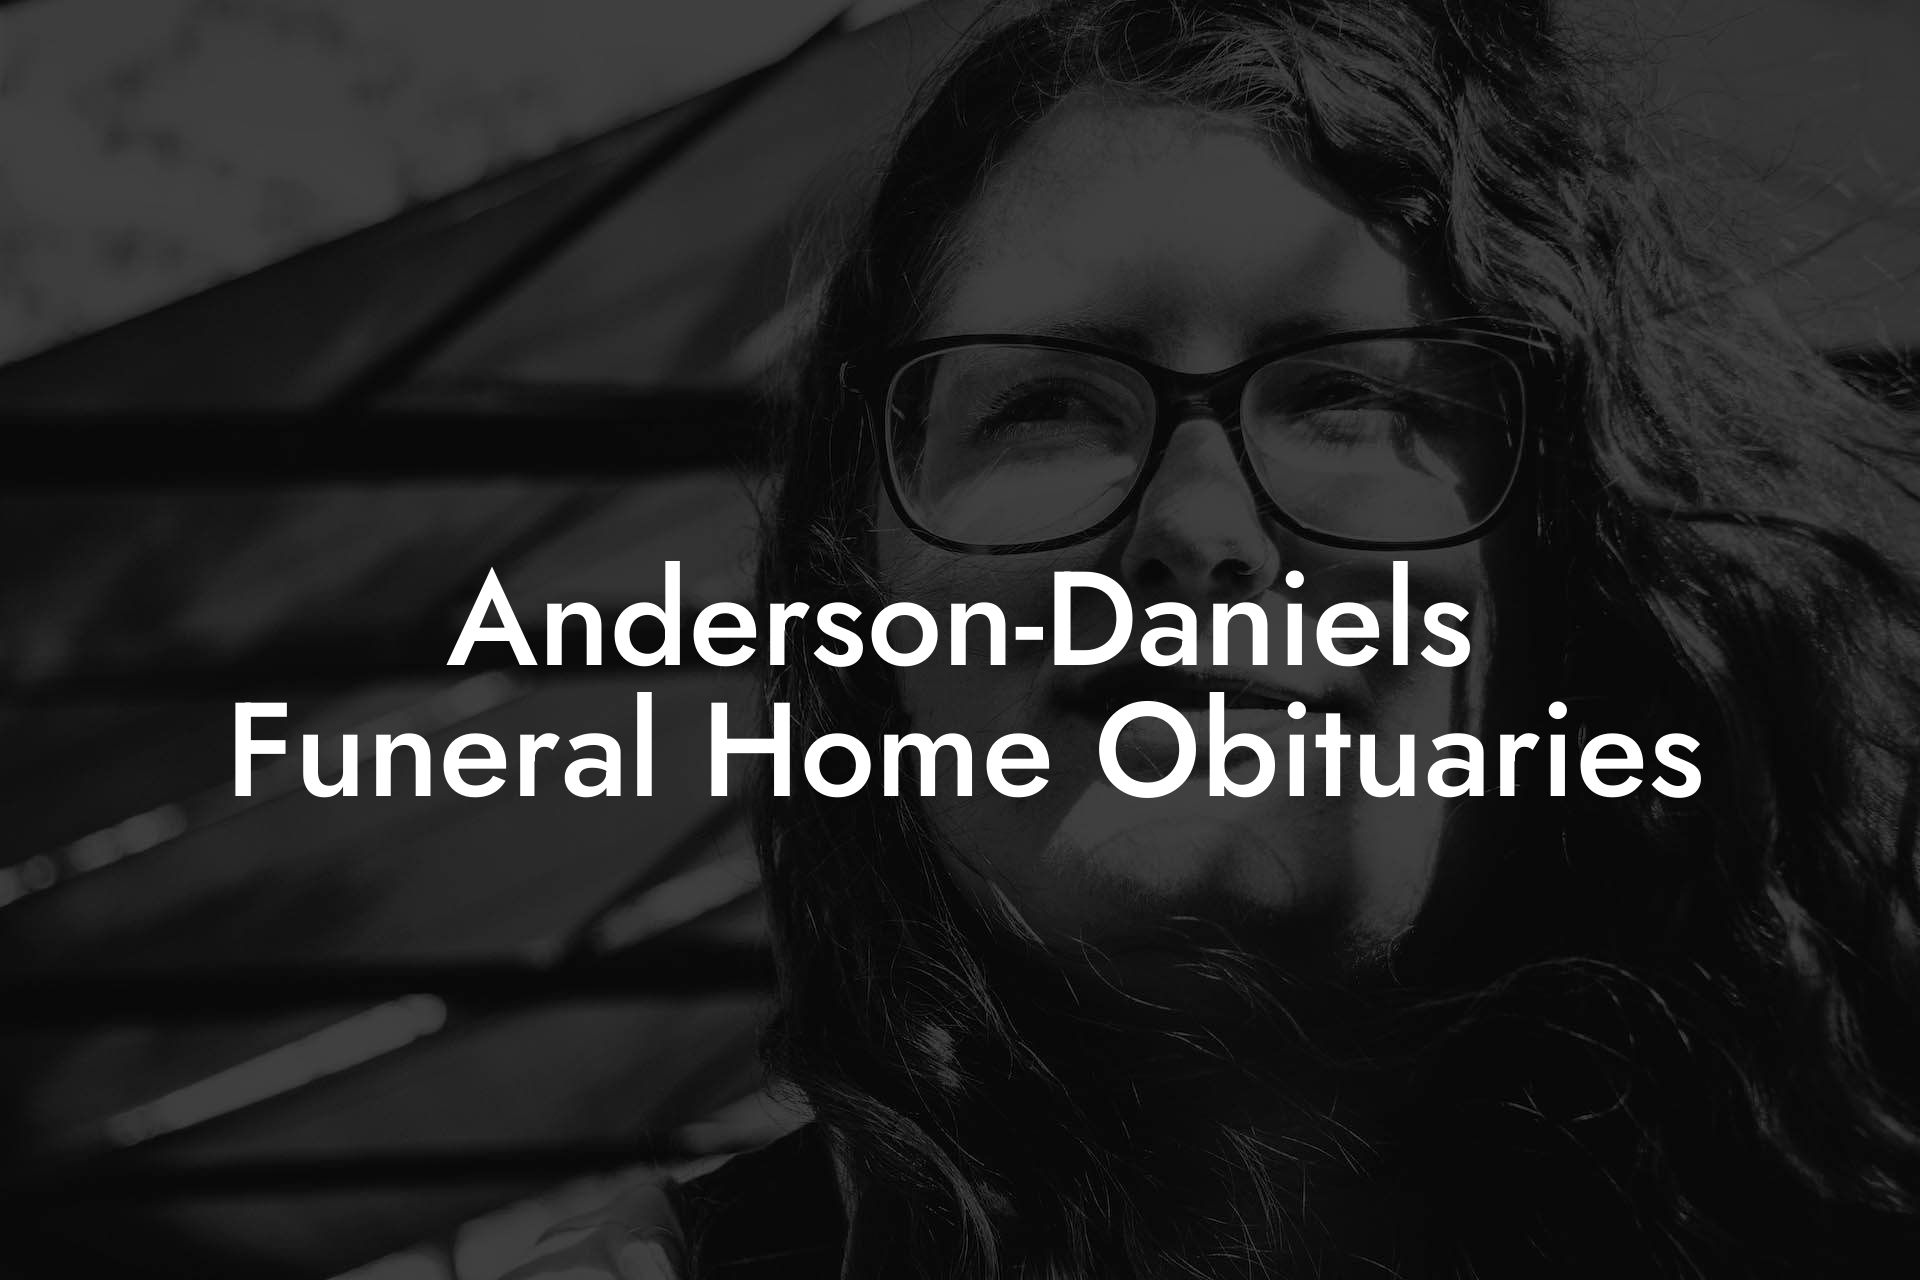 Anderson-Daniels Funeral Home Obituaries